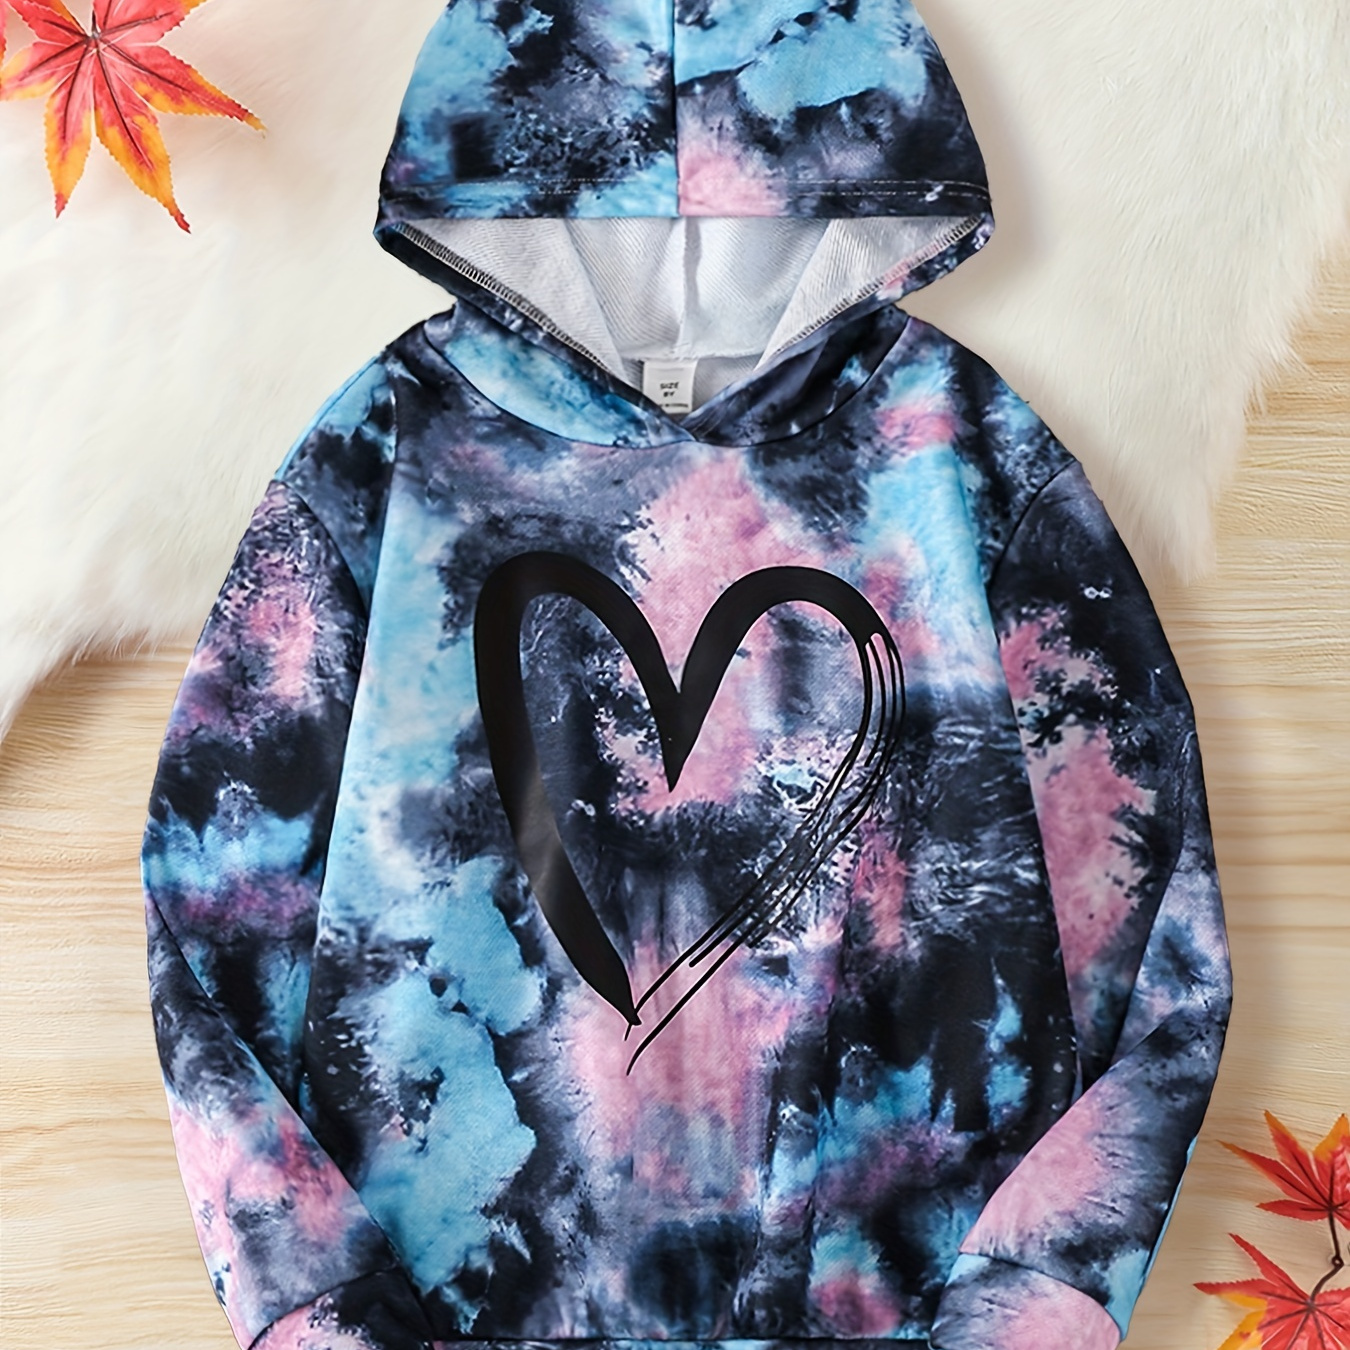 

Girls Tie Dye Heat Figure Print Casual Hoodie Sweatshirt Tops, Kids Pullovers For Spring/ Fall, Gift Idea